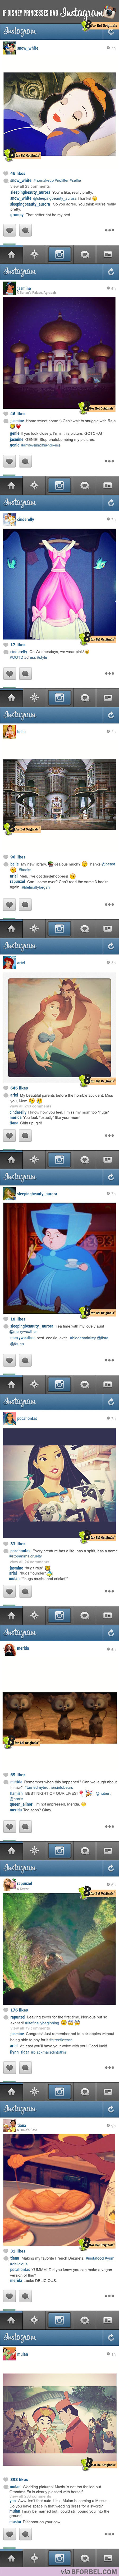 If Disney Princesses Had Instagram...